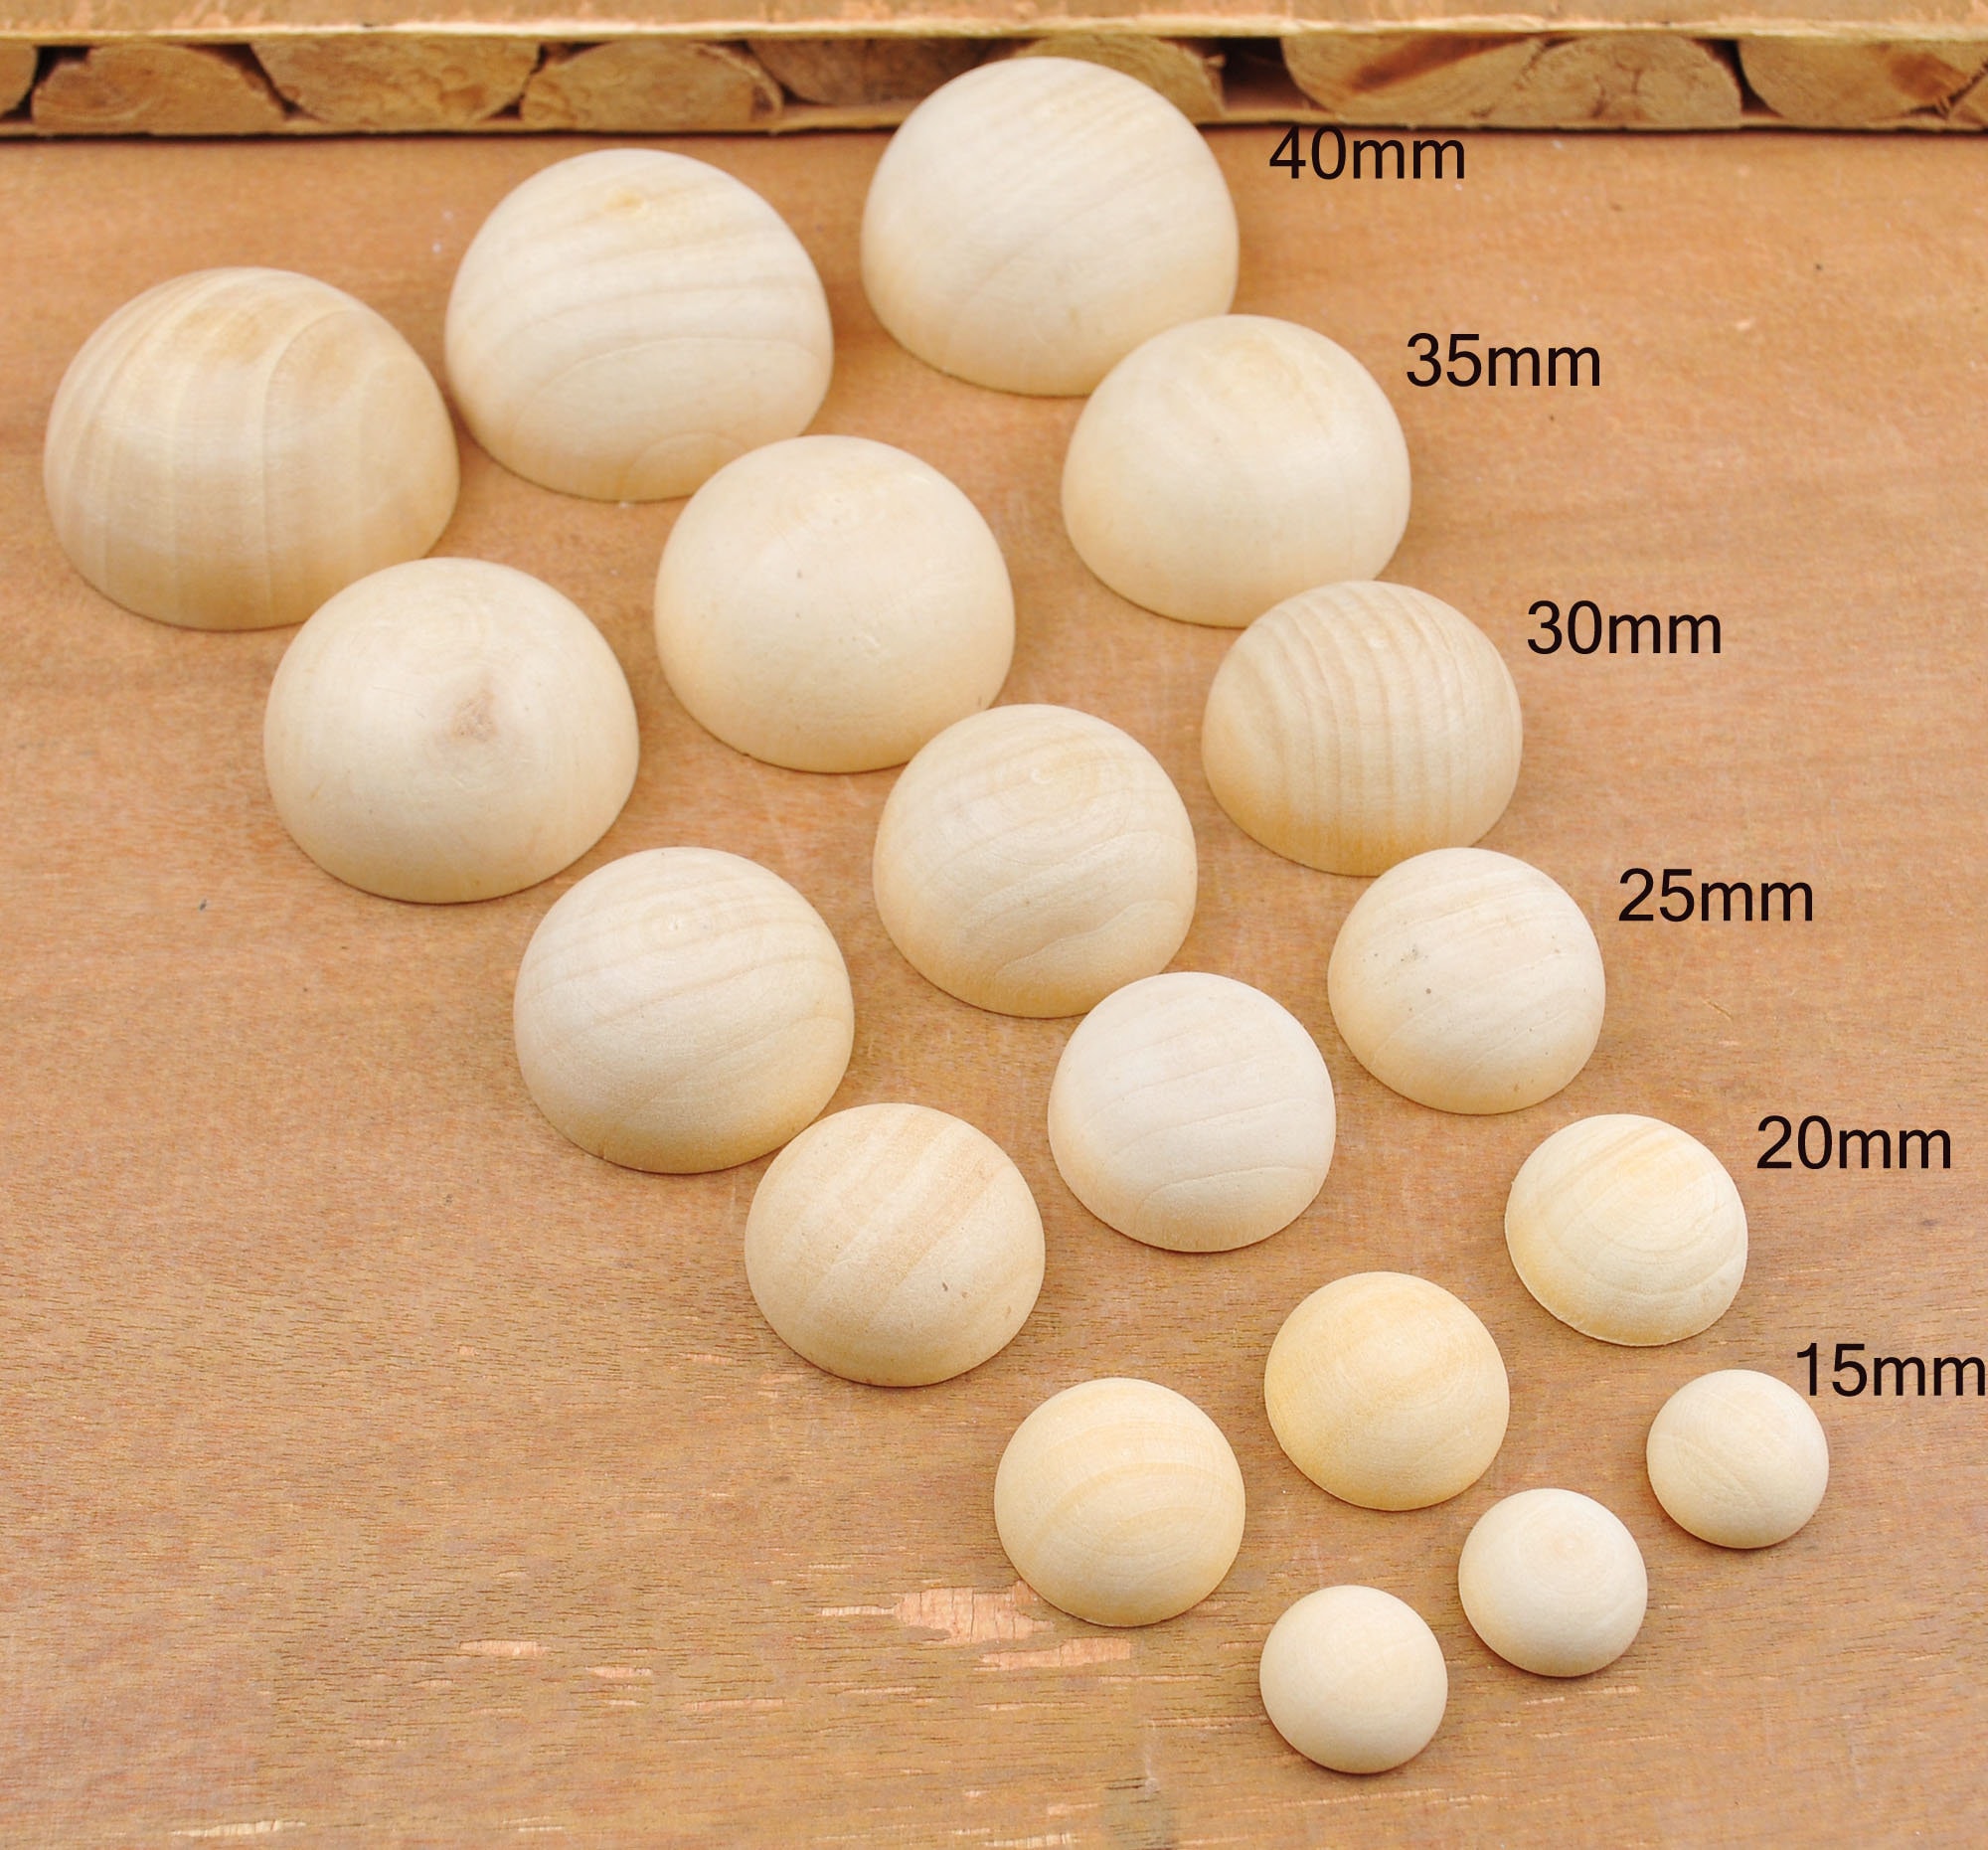 WSICSE 400Pcs 12&15 mm Half Wooden Beads, Half Wood Balls Half